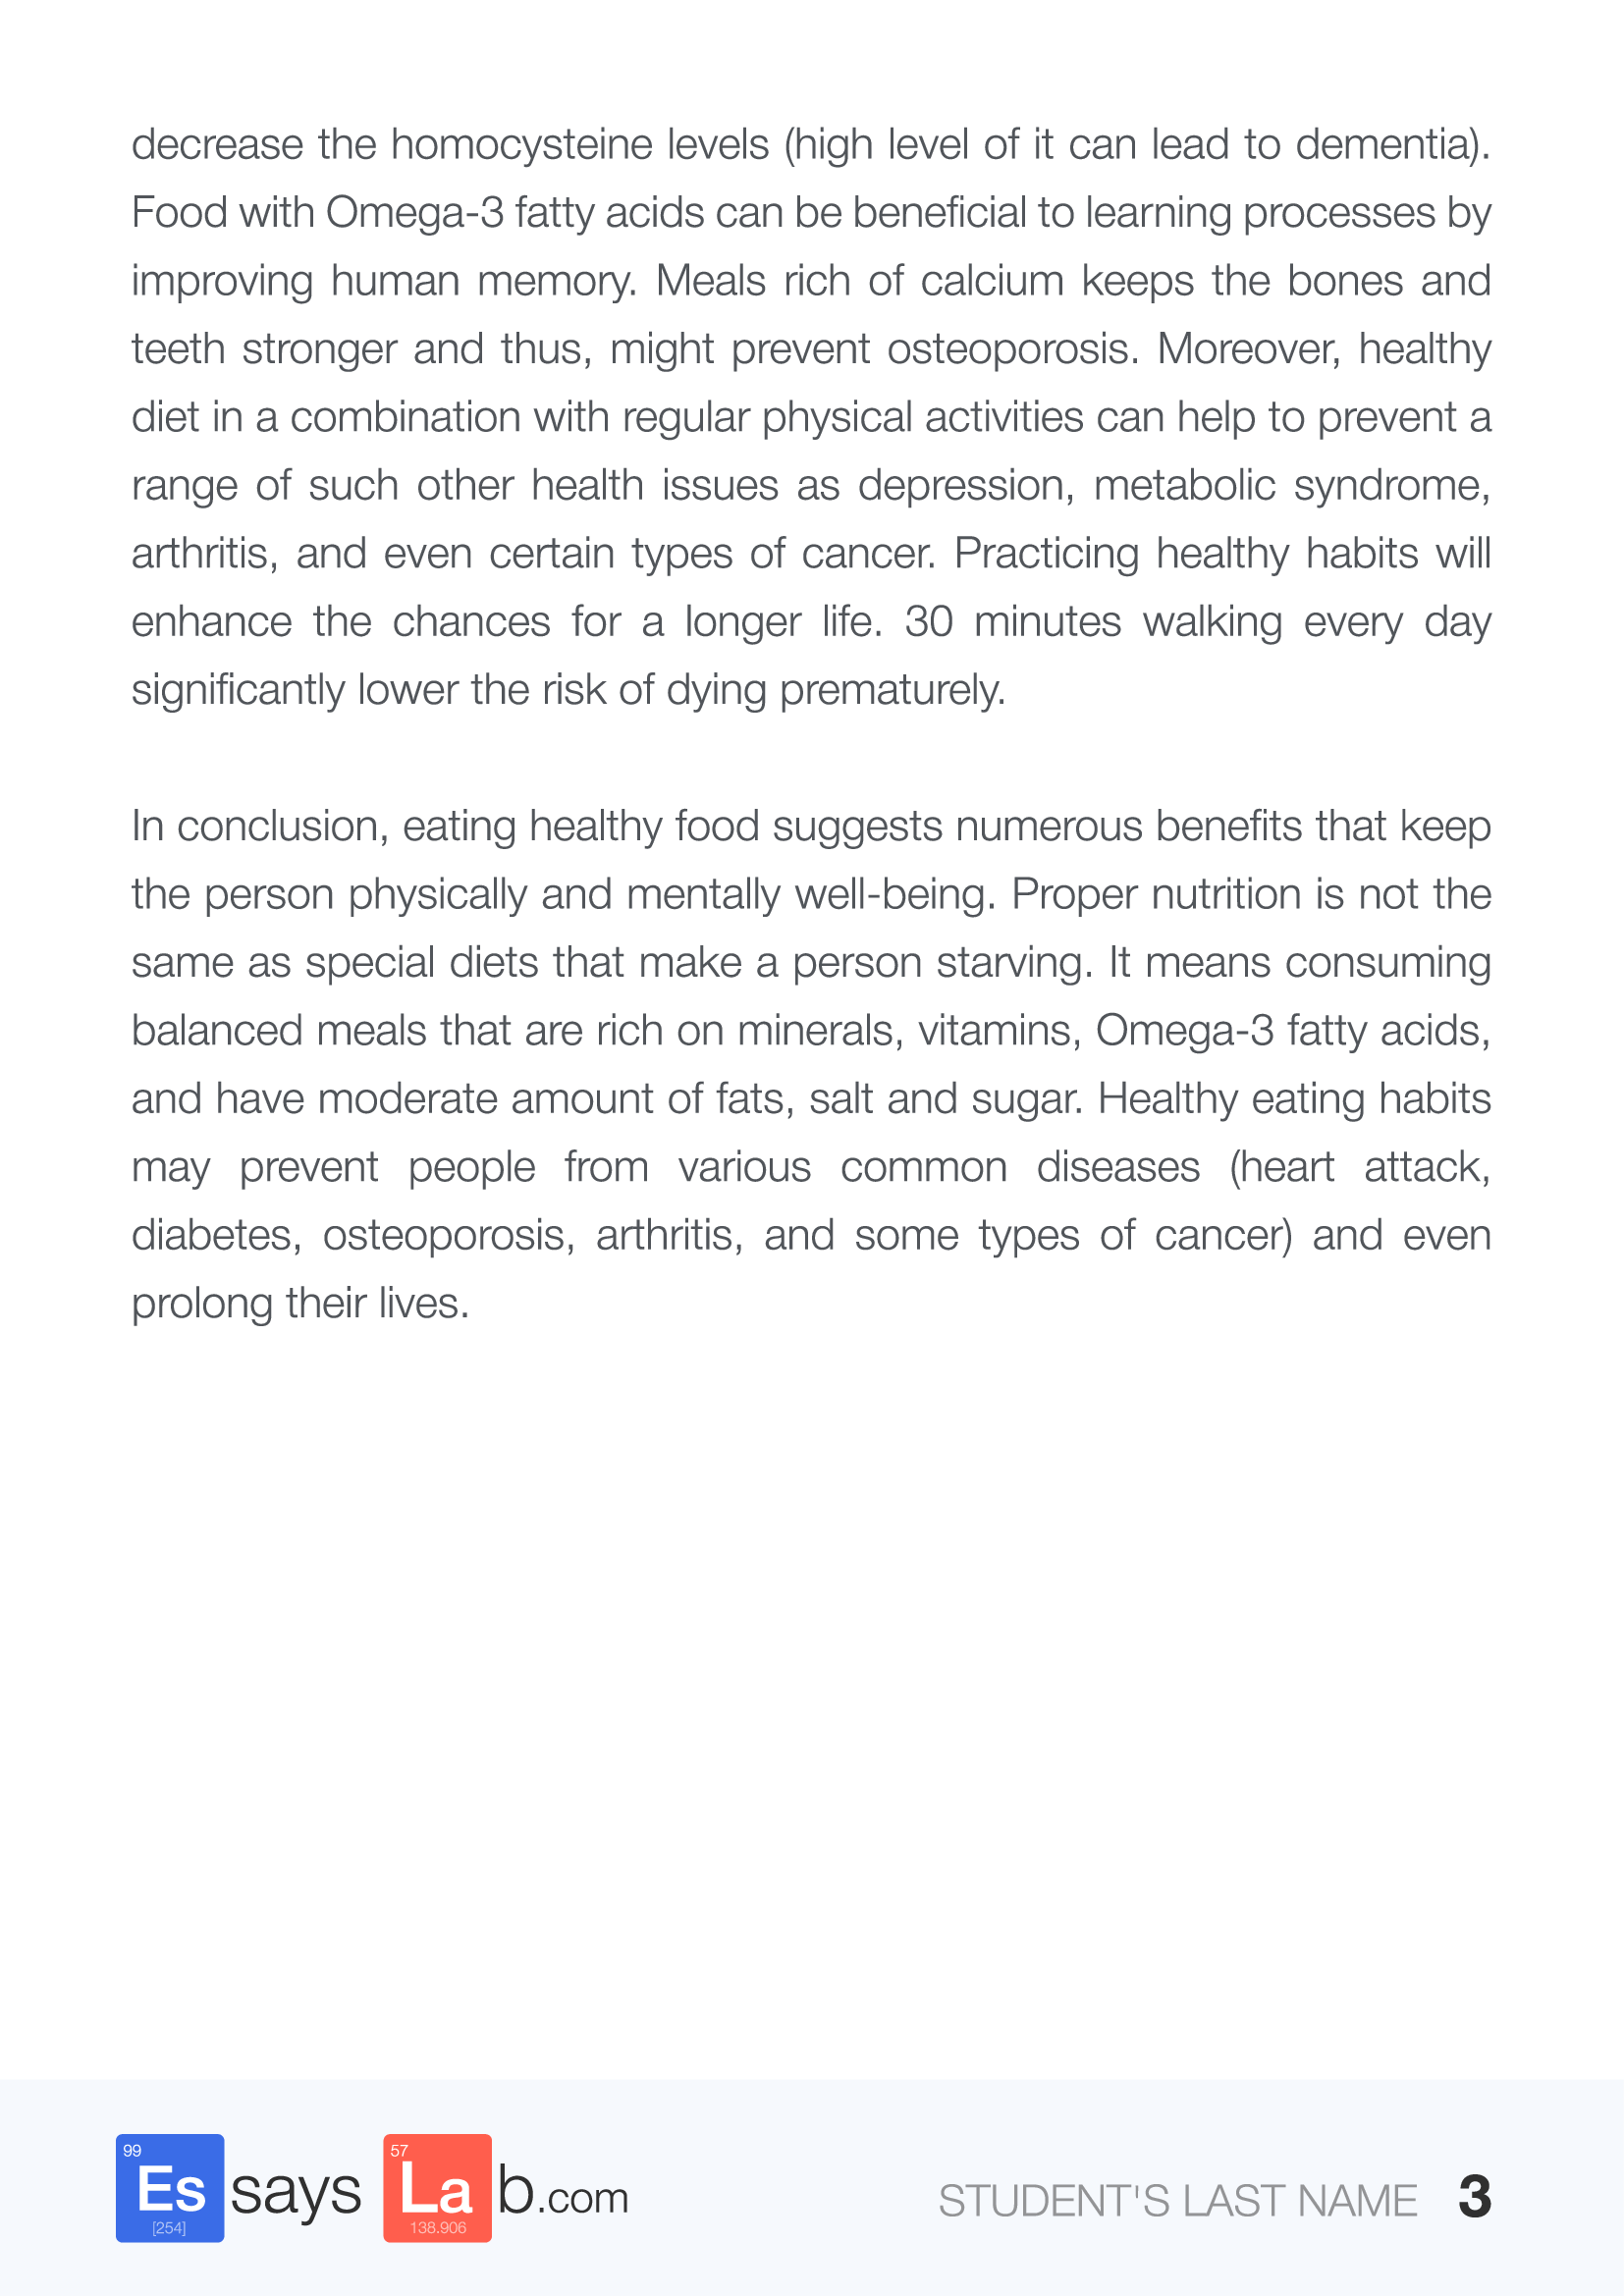 Healthy Eating Essay Sample 3.png